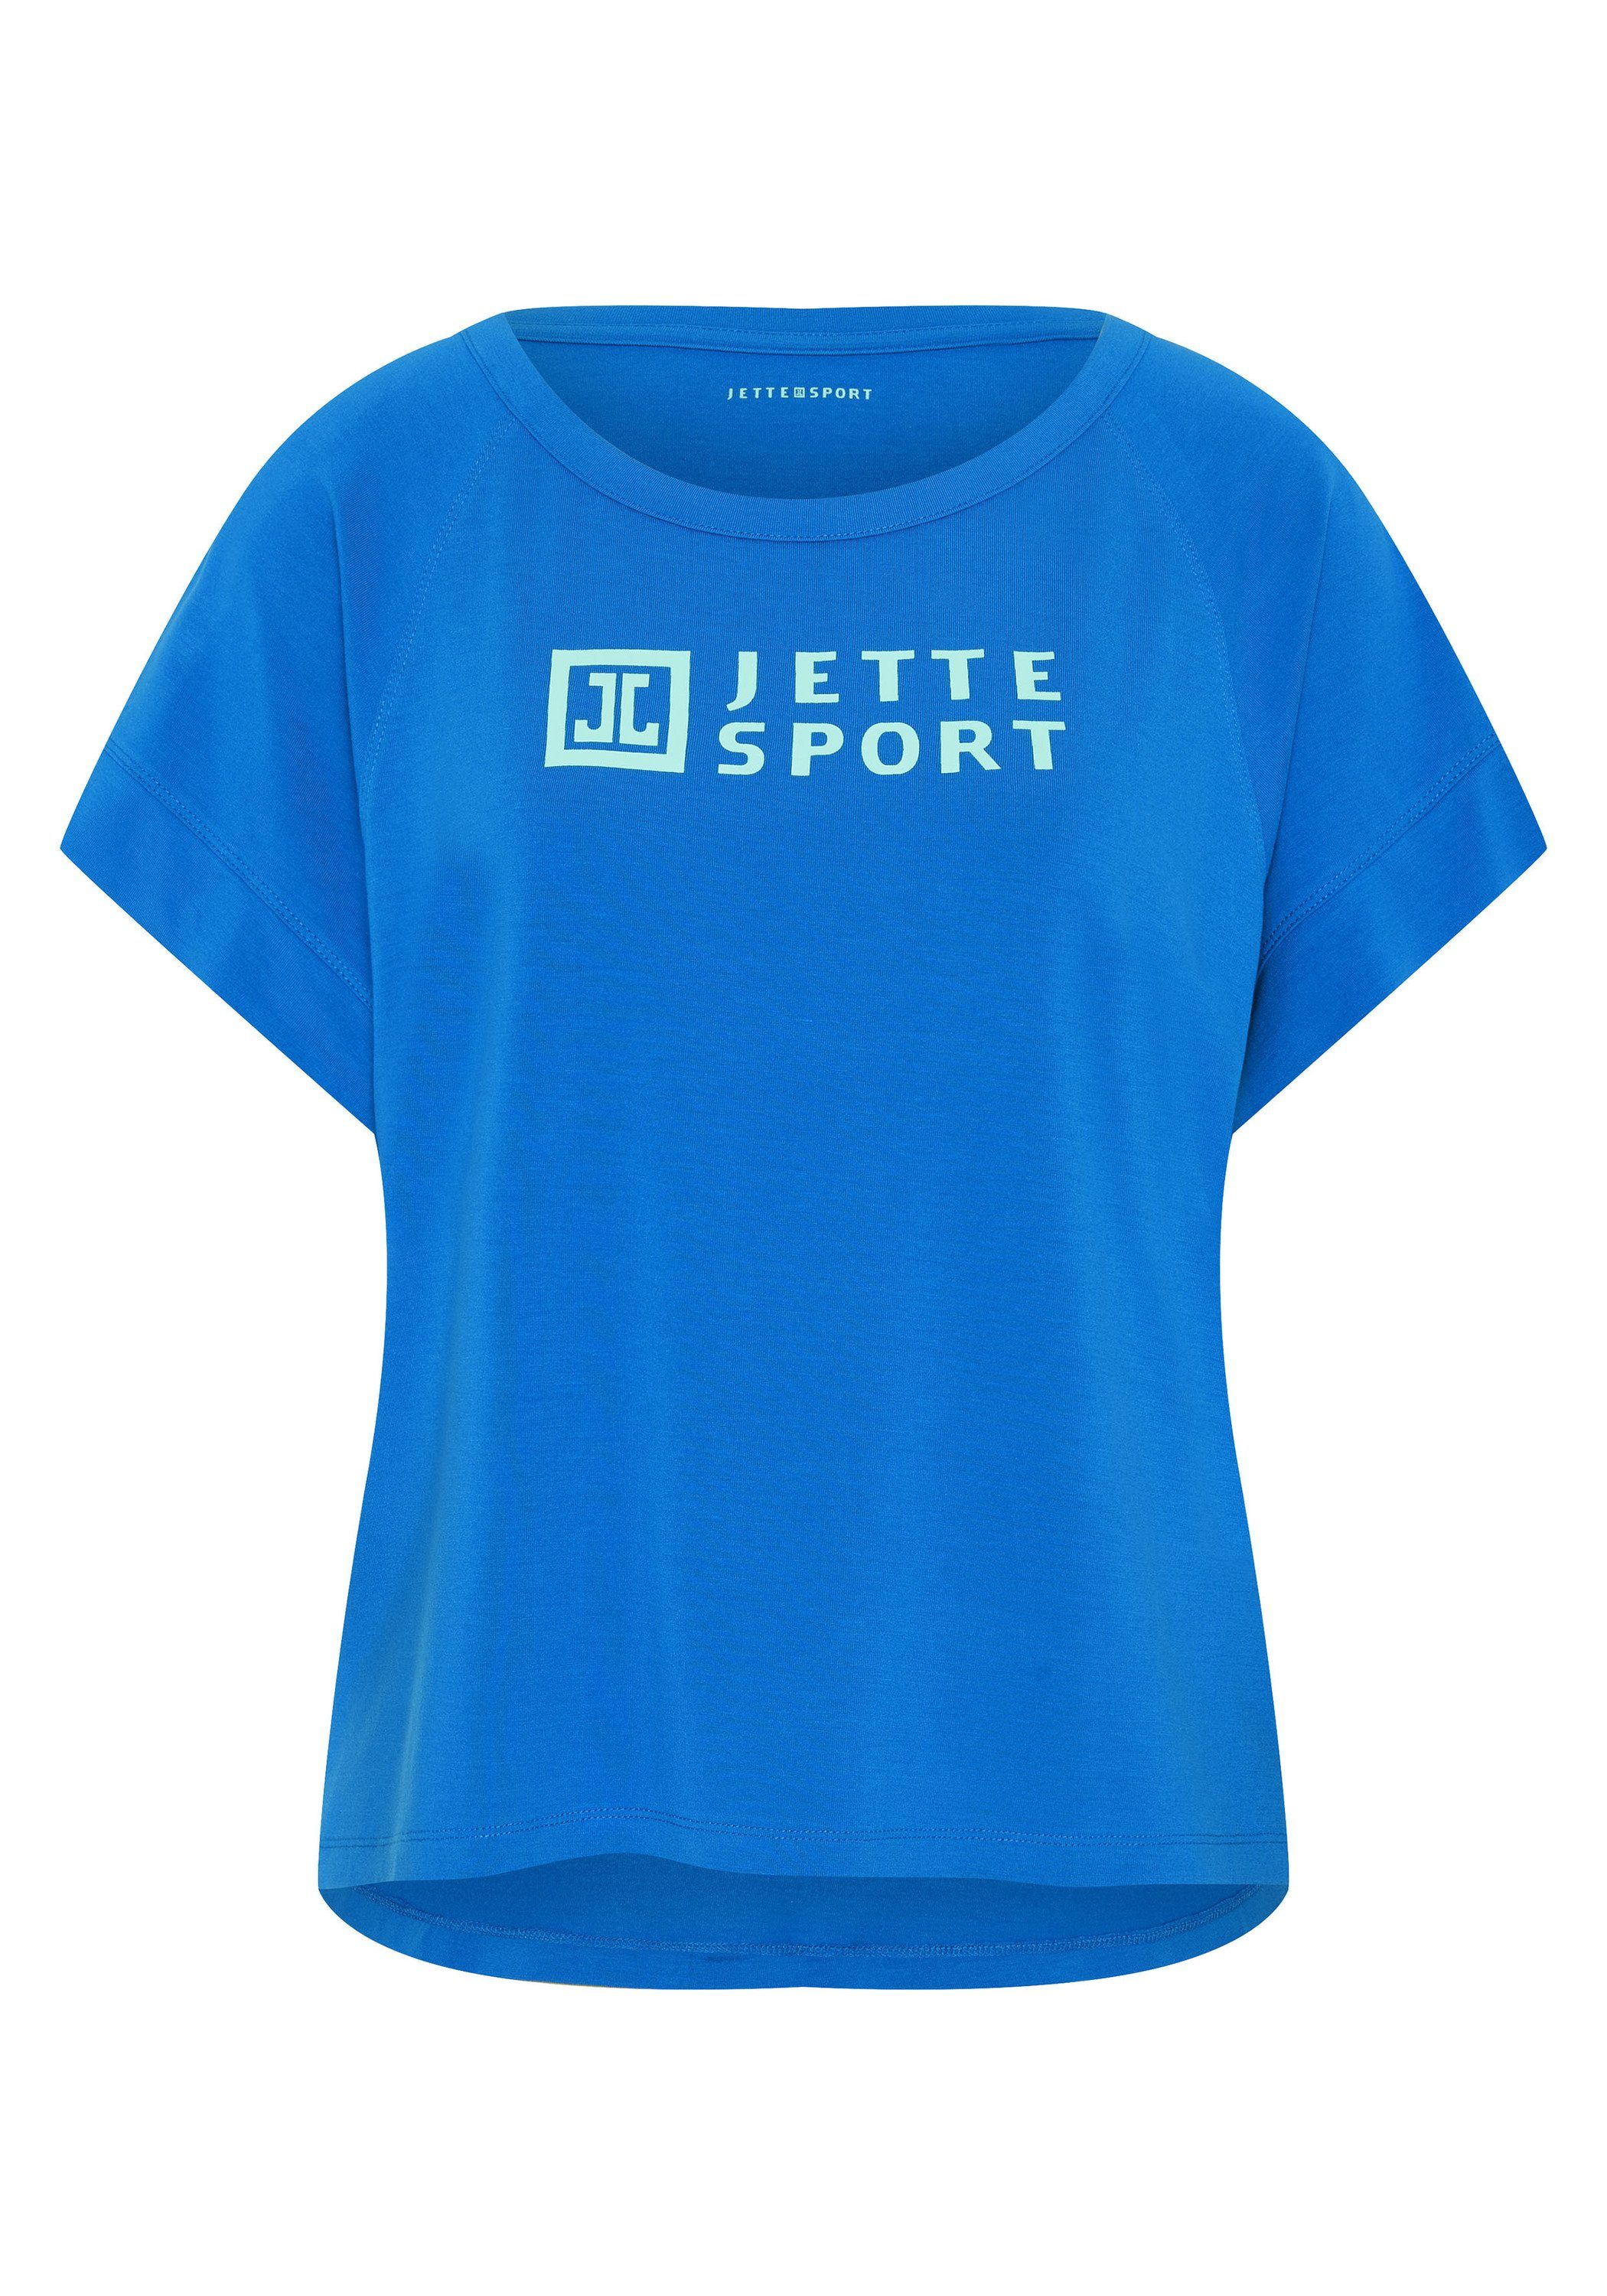 Print-Shirt JETTE und Comfort-Fit Princess boxy 19-4150 SPORT Shape Blue